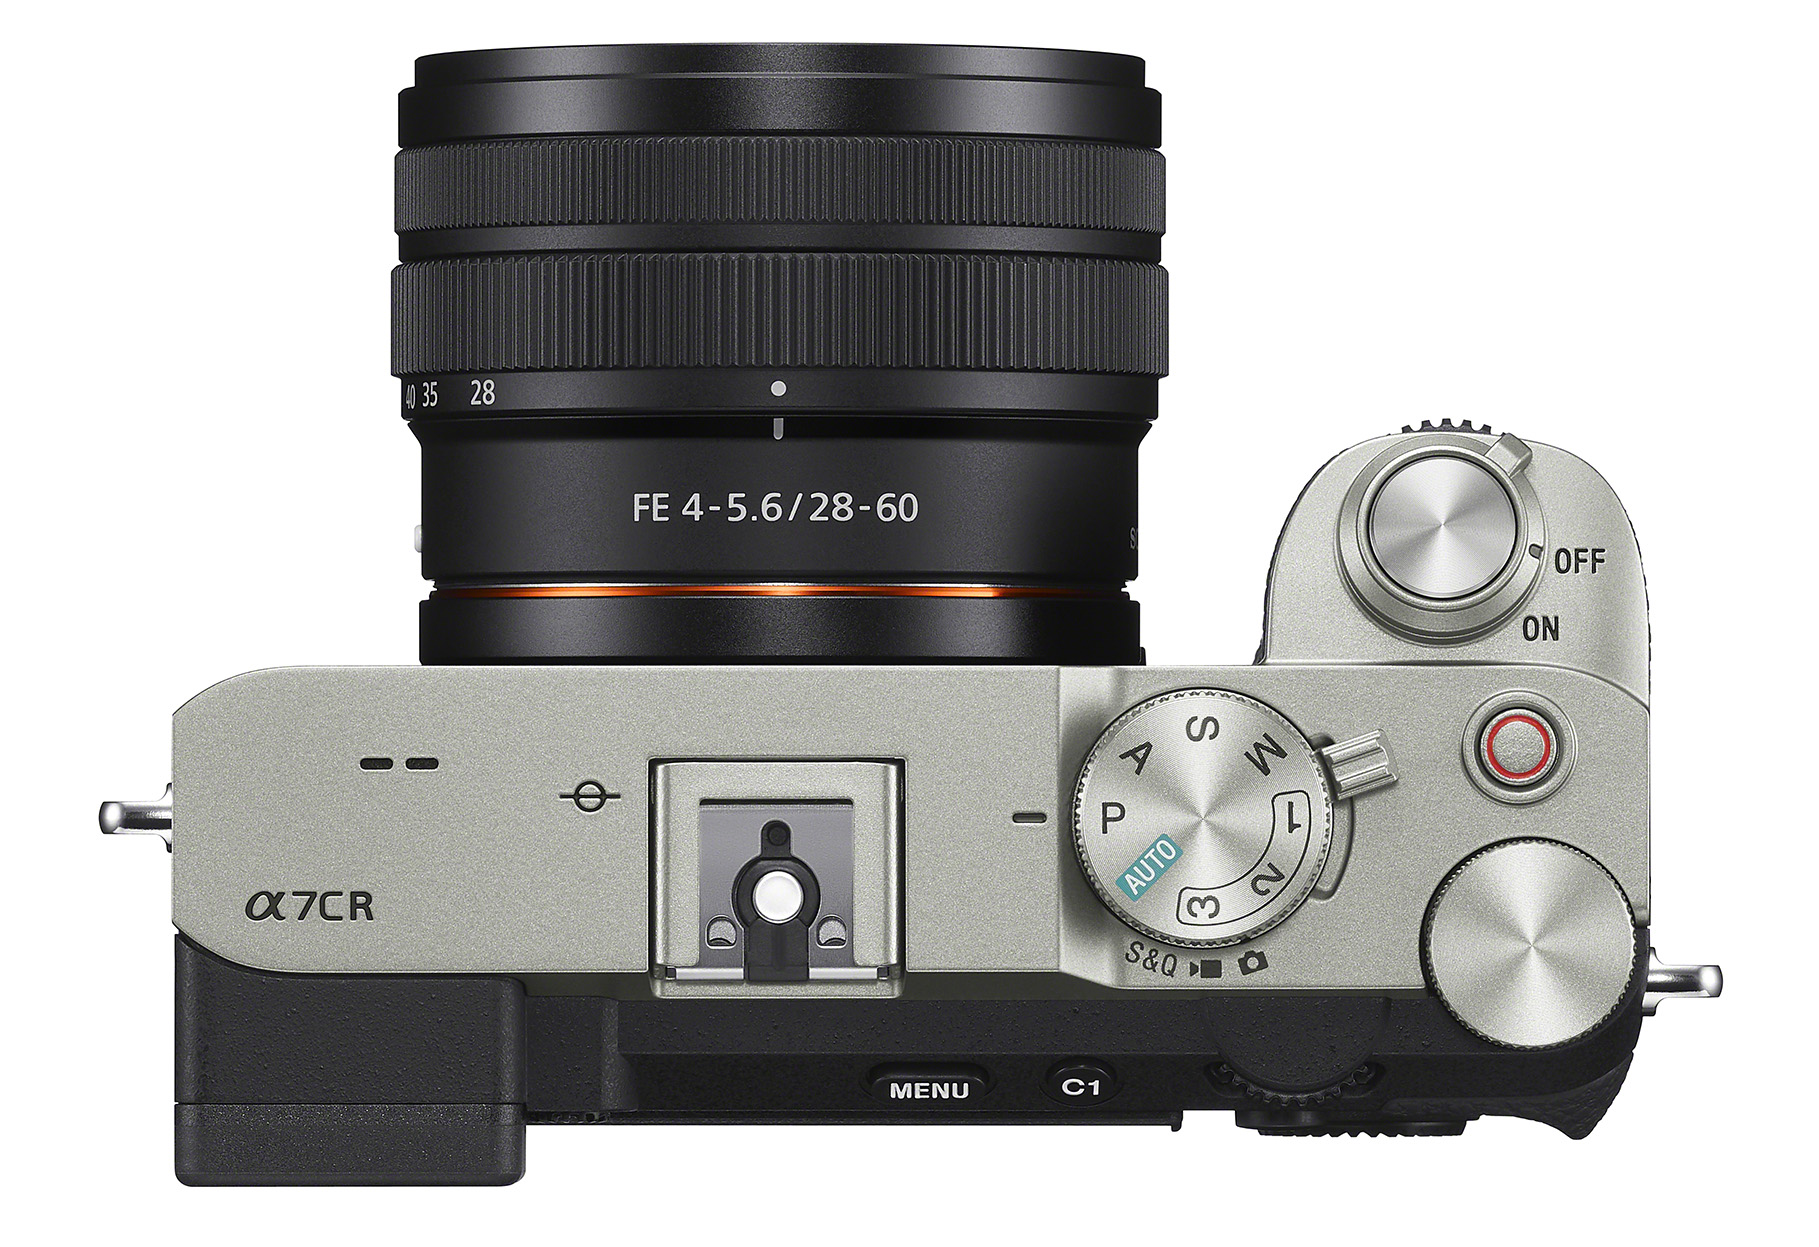 Sony Alpha 7C R camera